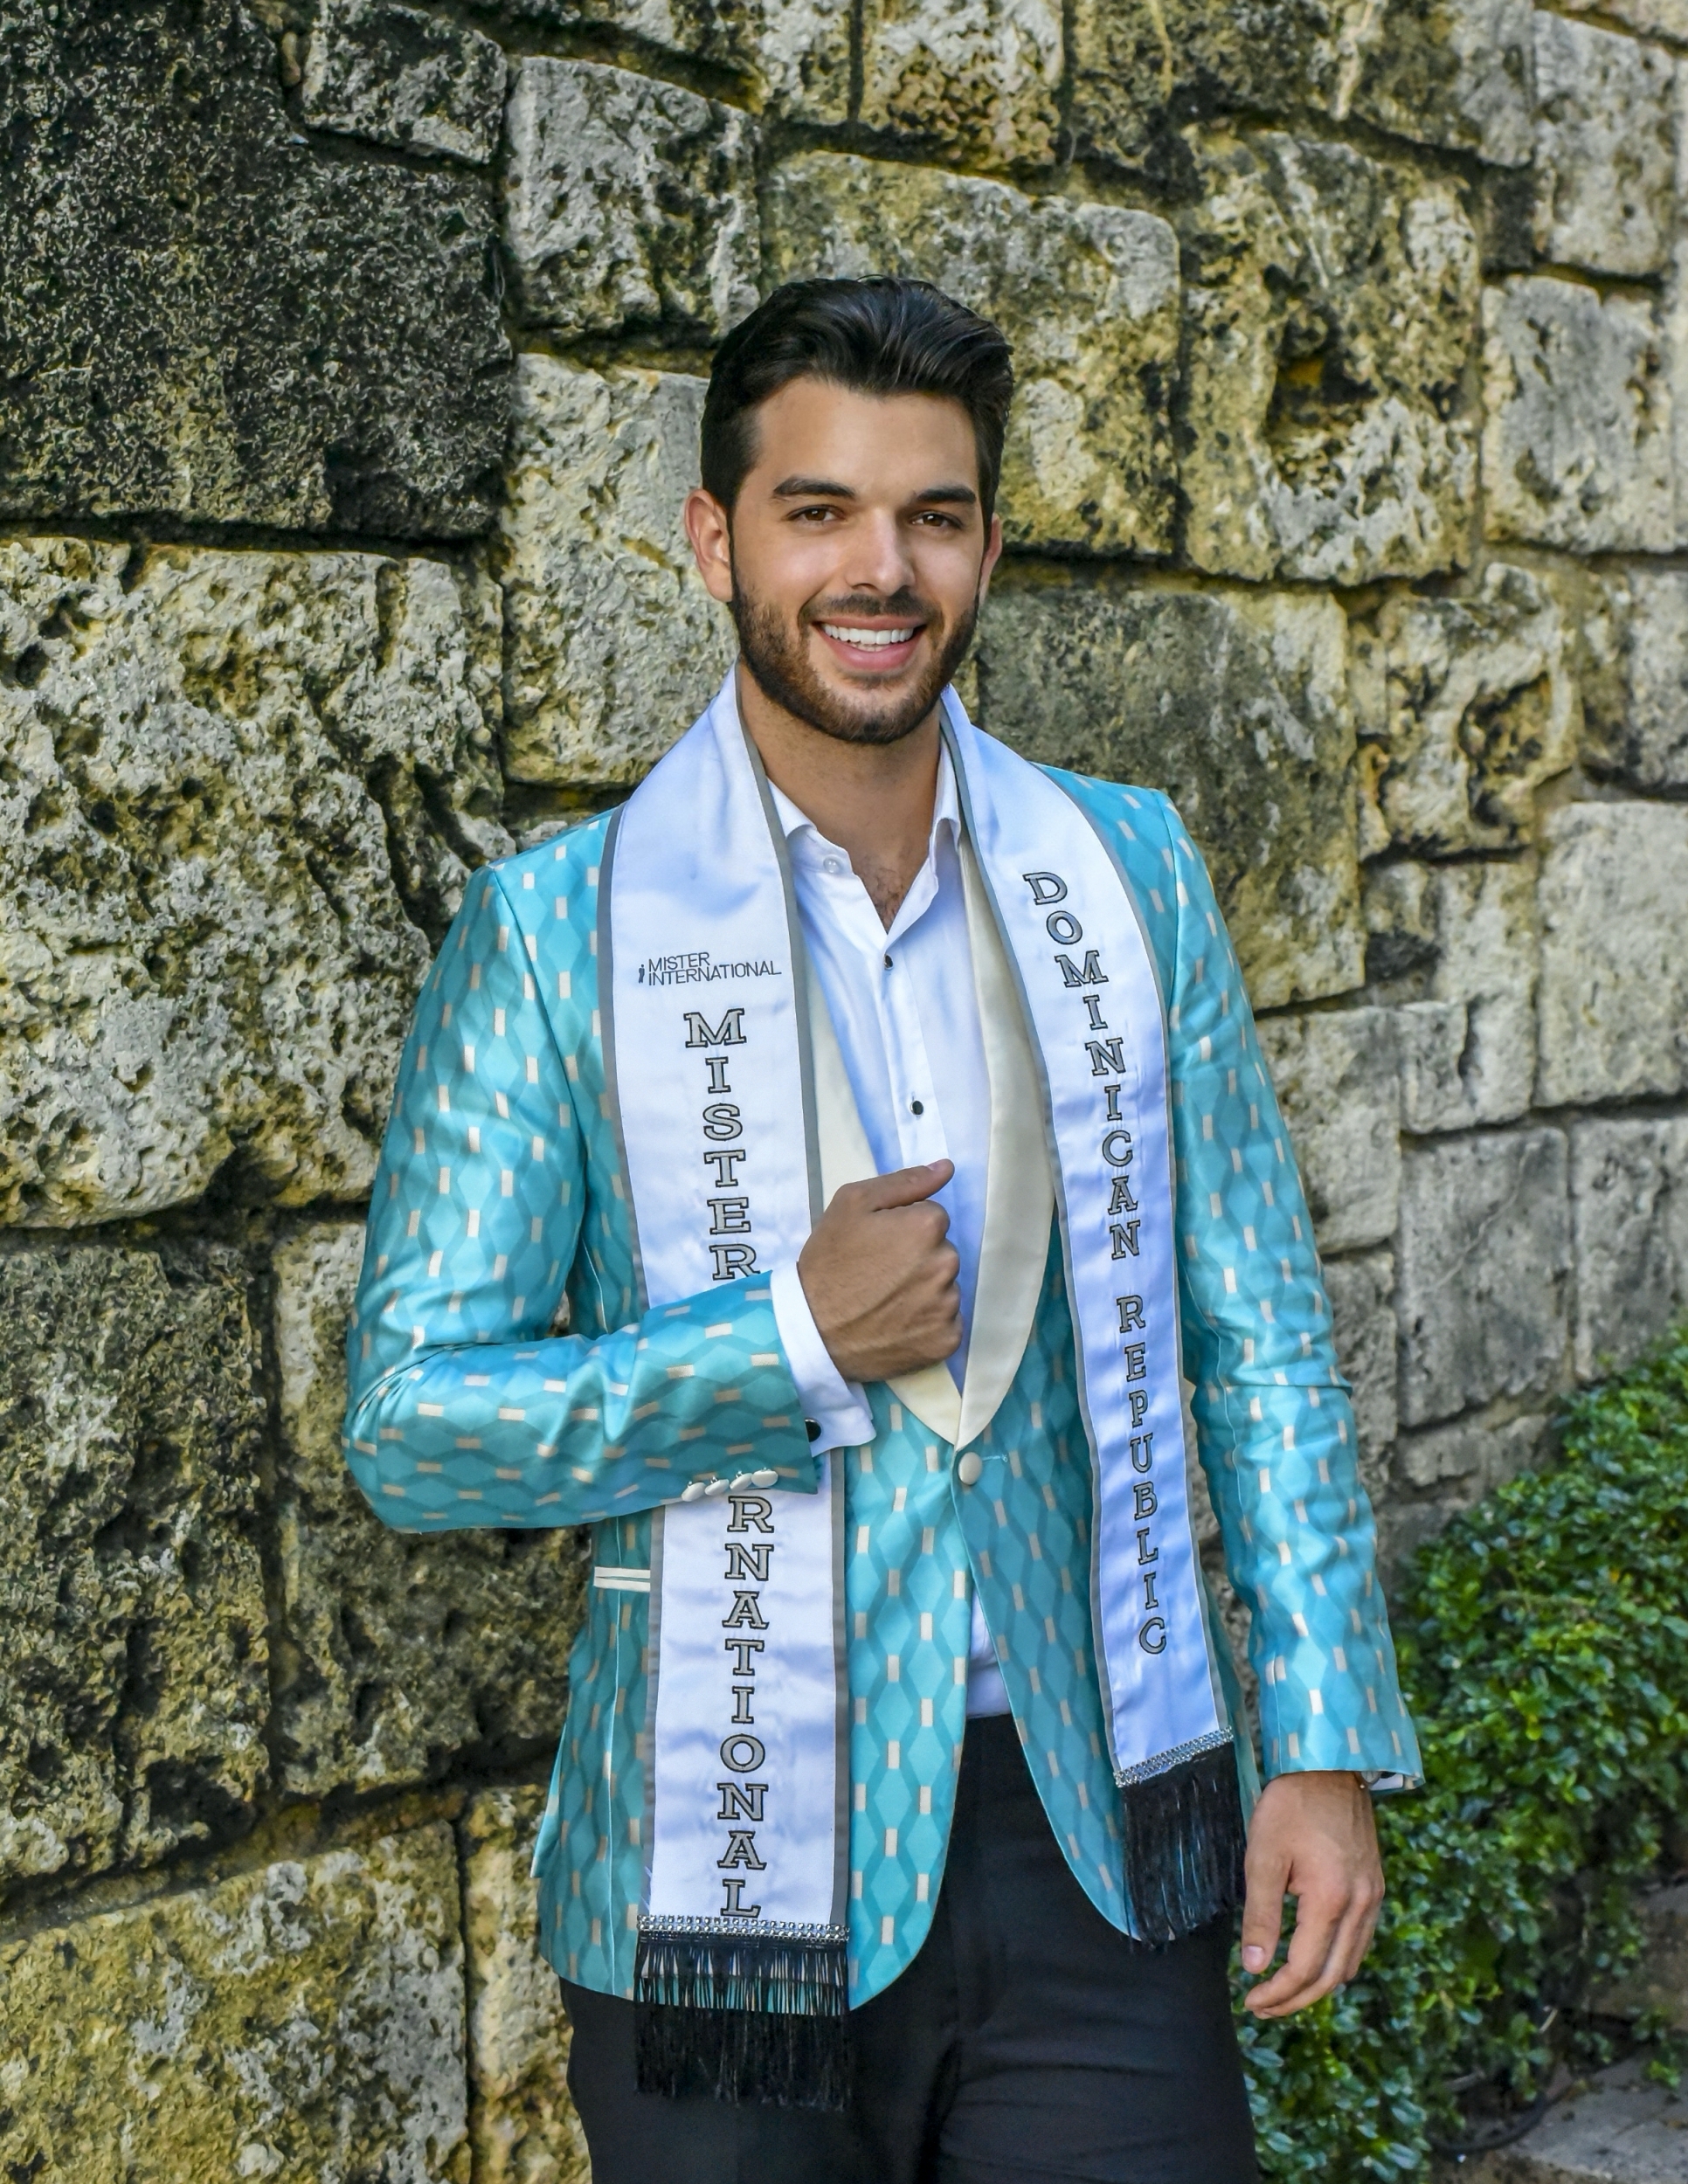 Christian Roman is Mister International Dominican Republic 2021 1